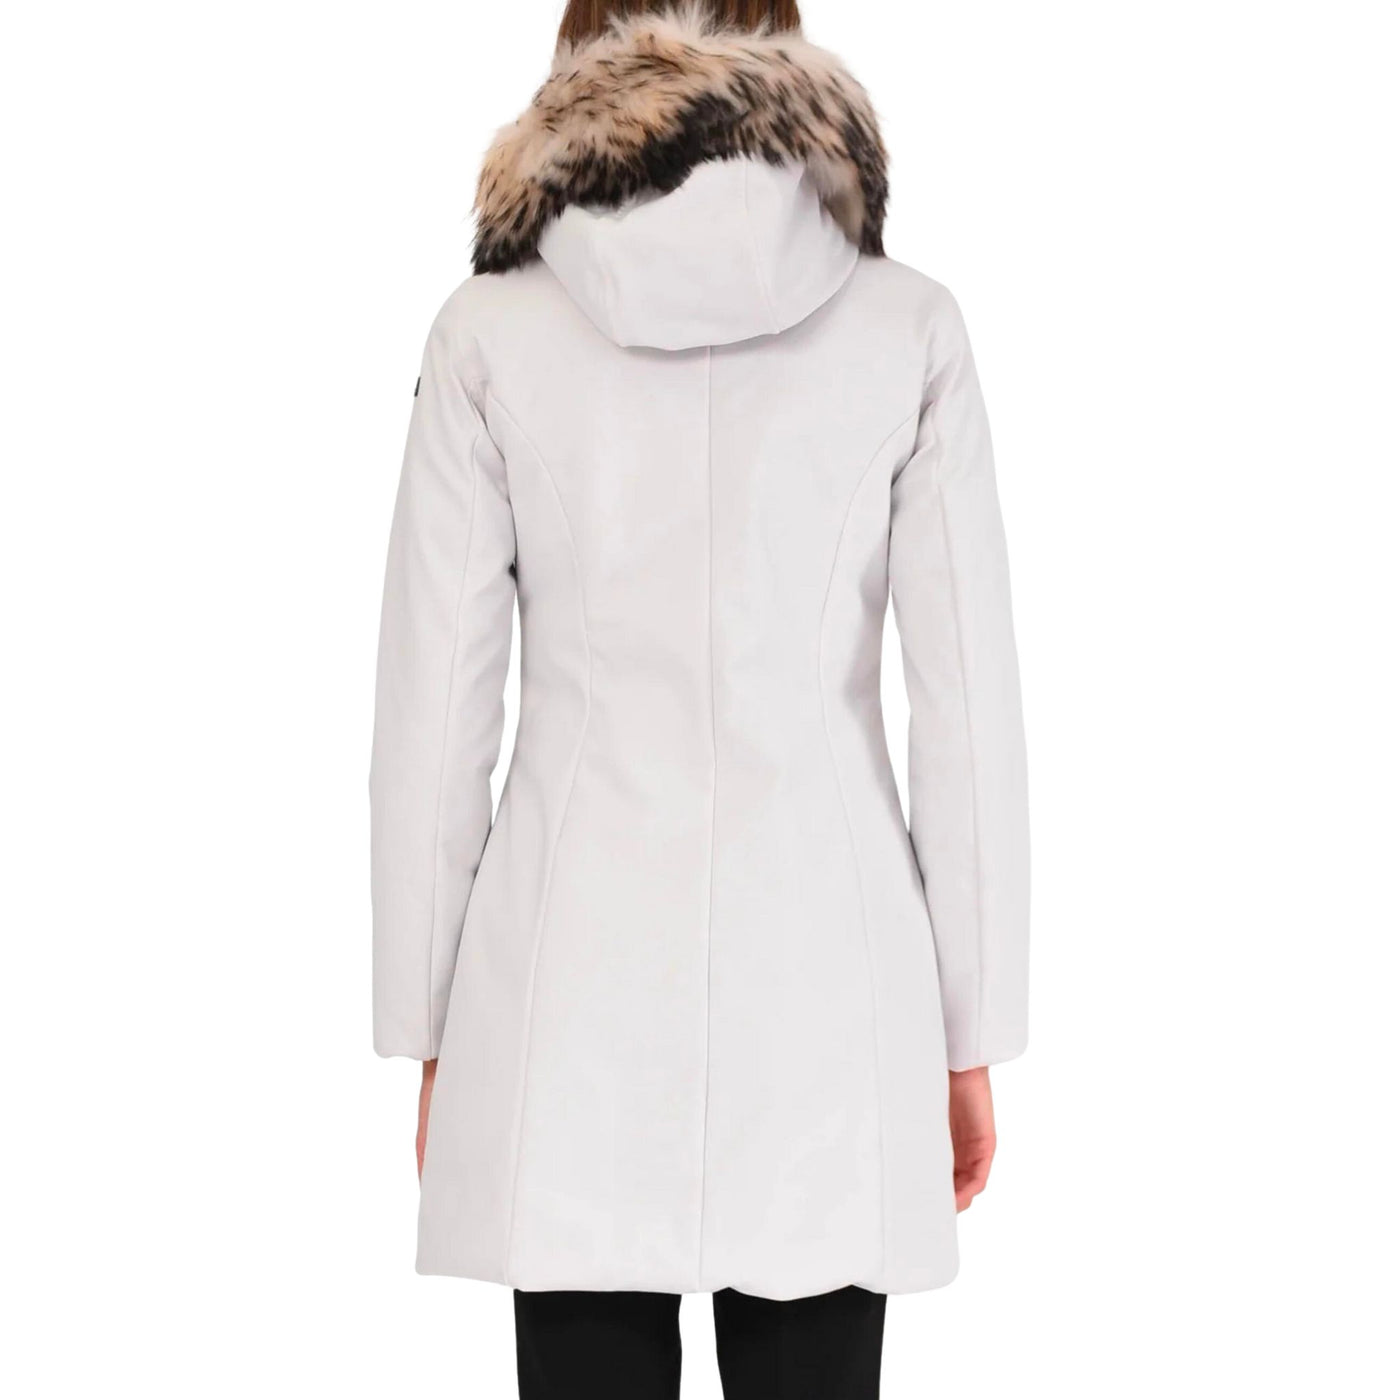 Giaccone Donna Winter Long Fur Bianco, RRD, indossato retro